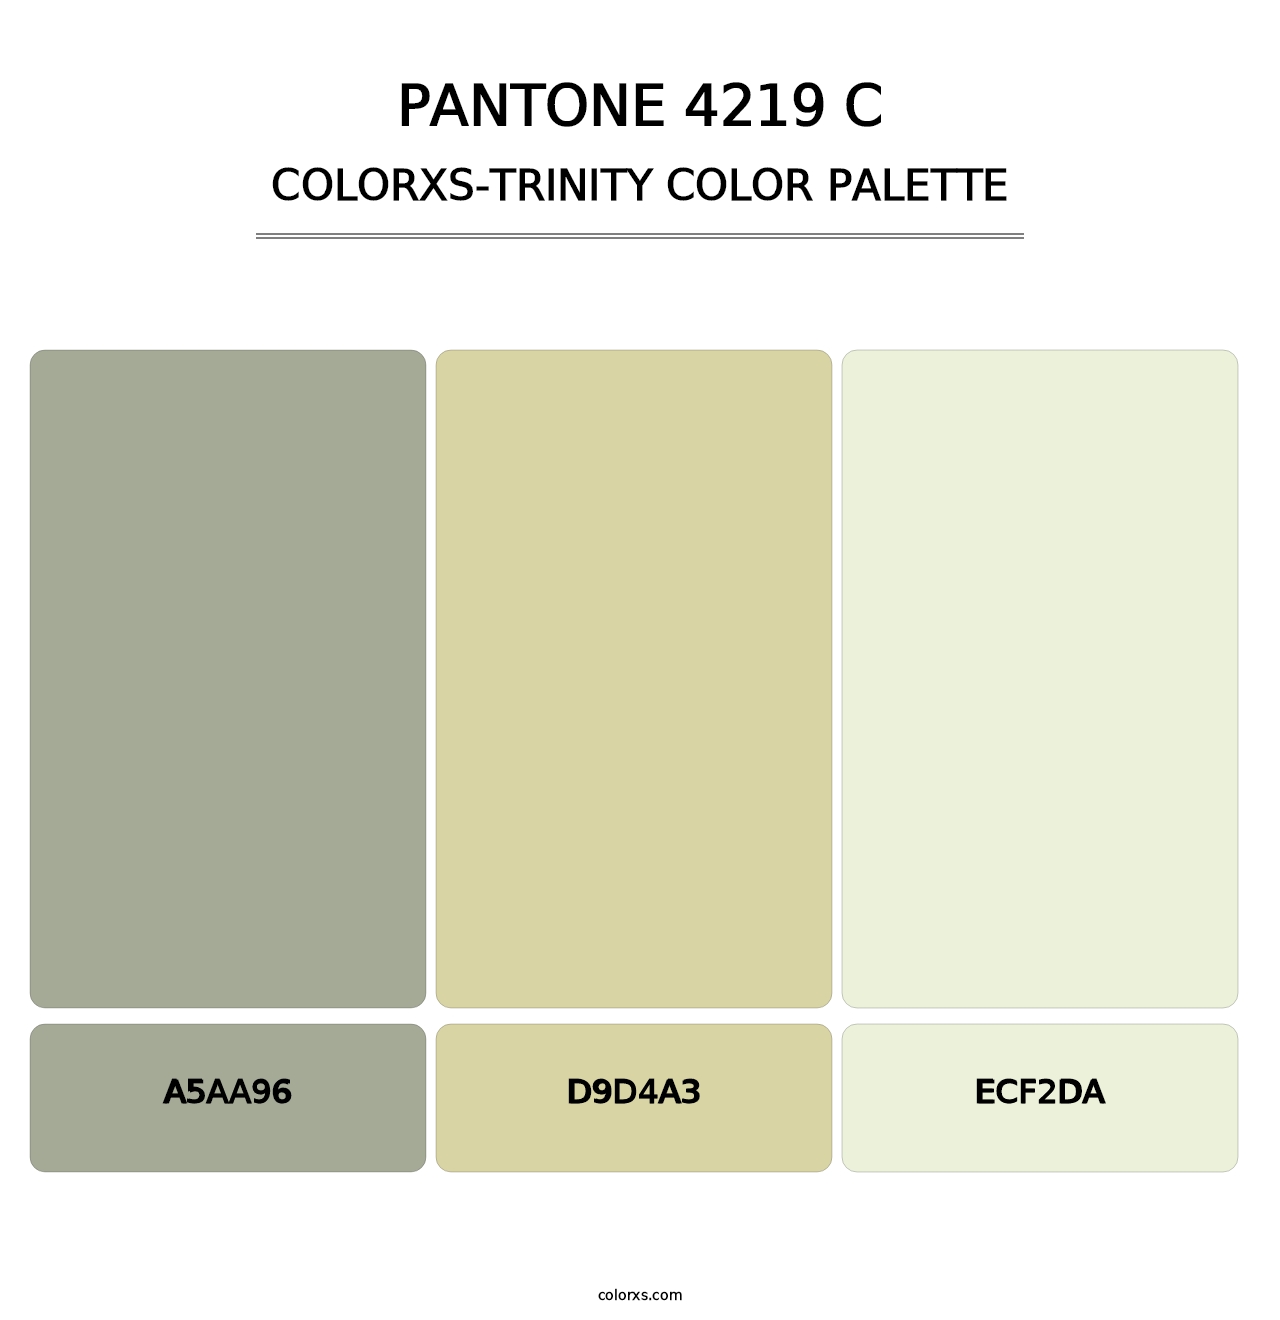 PANTONE 4219 C - Colorxs Trinity Palette